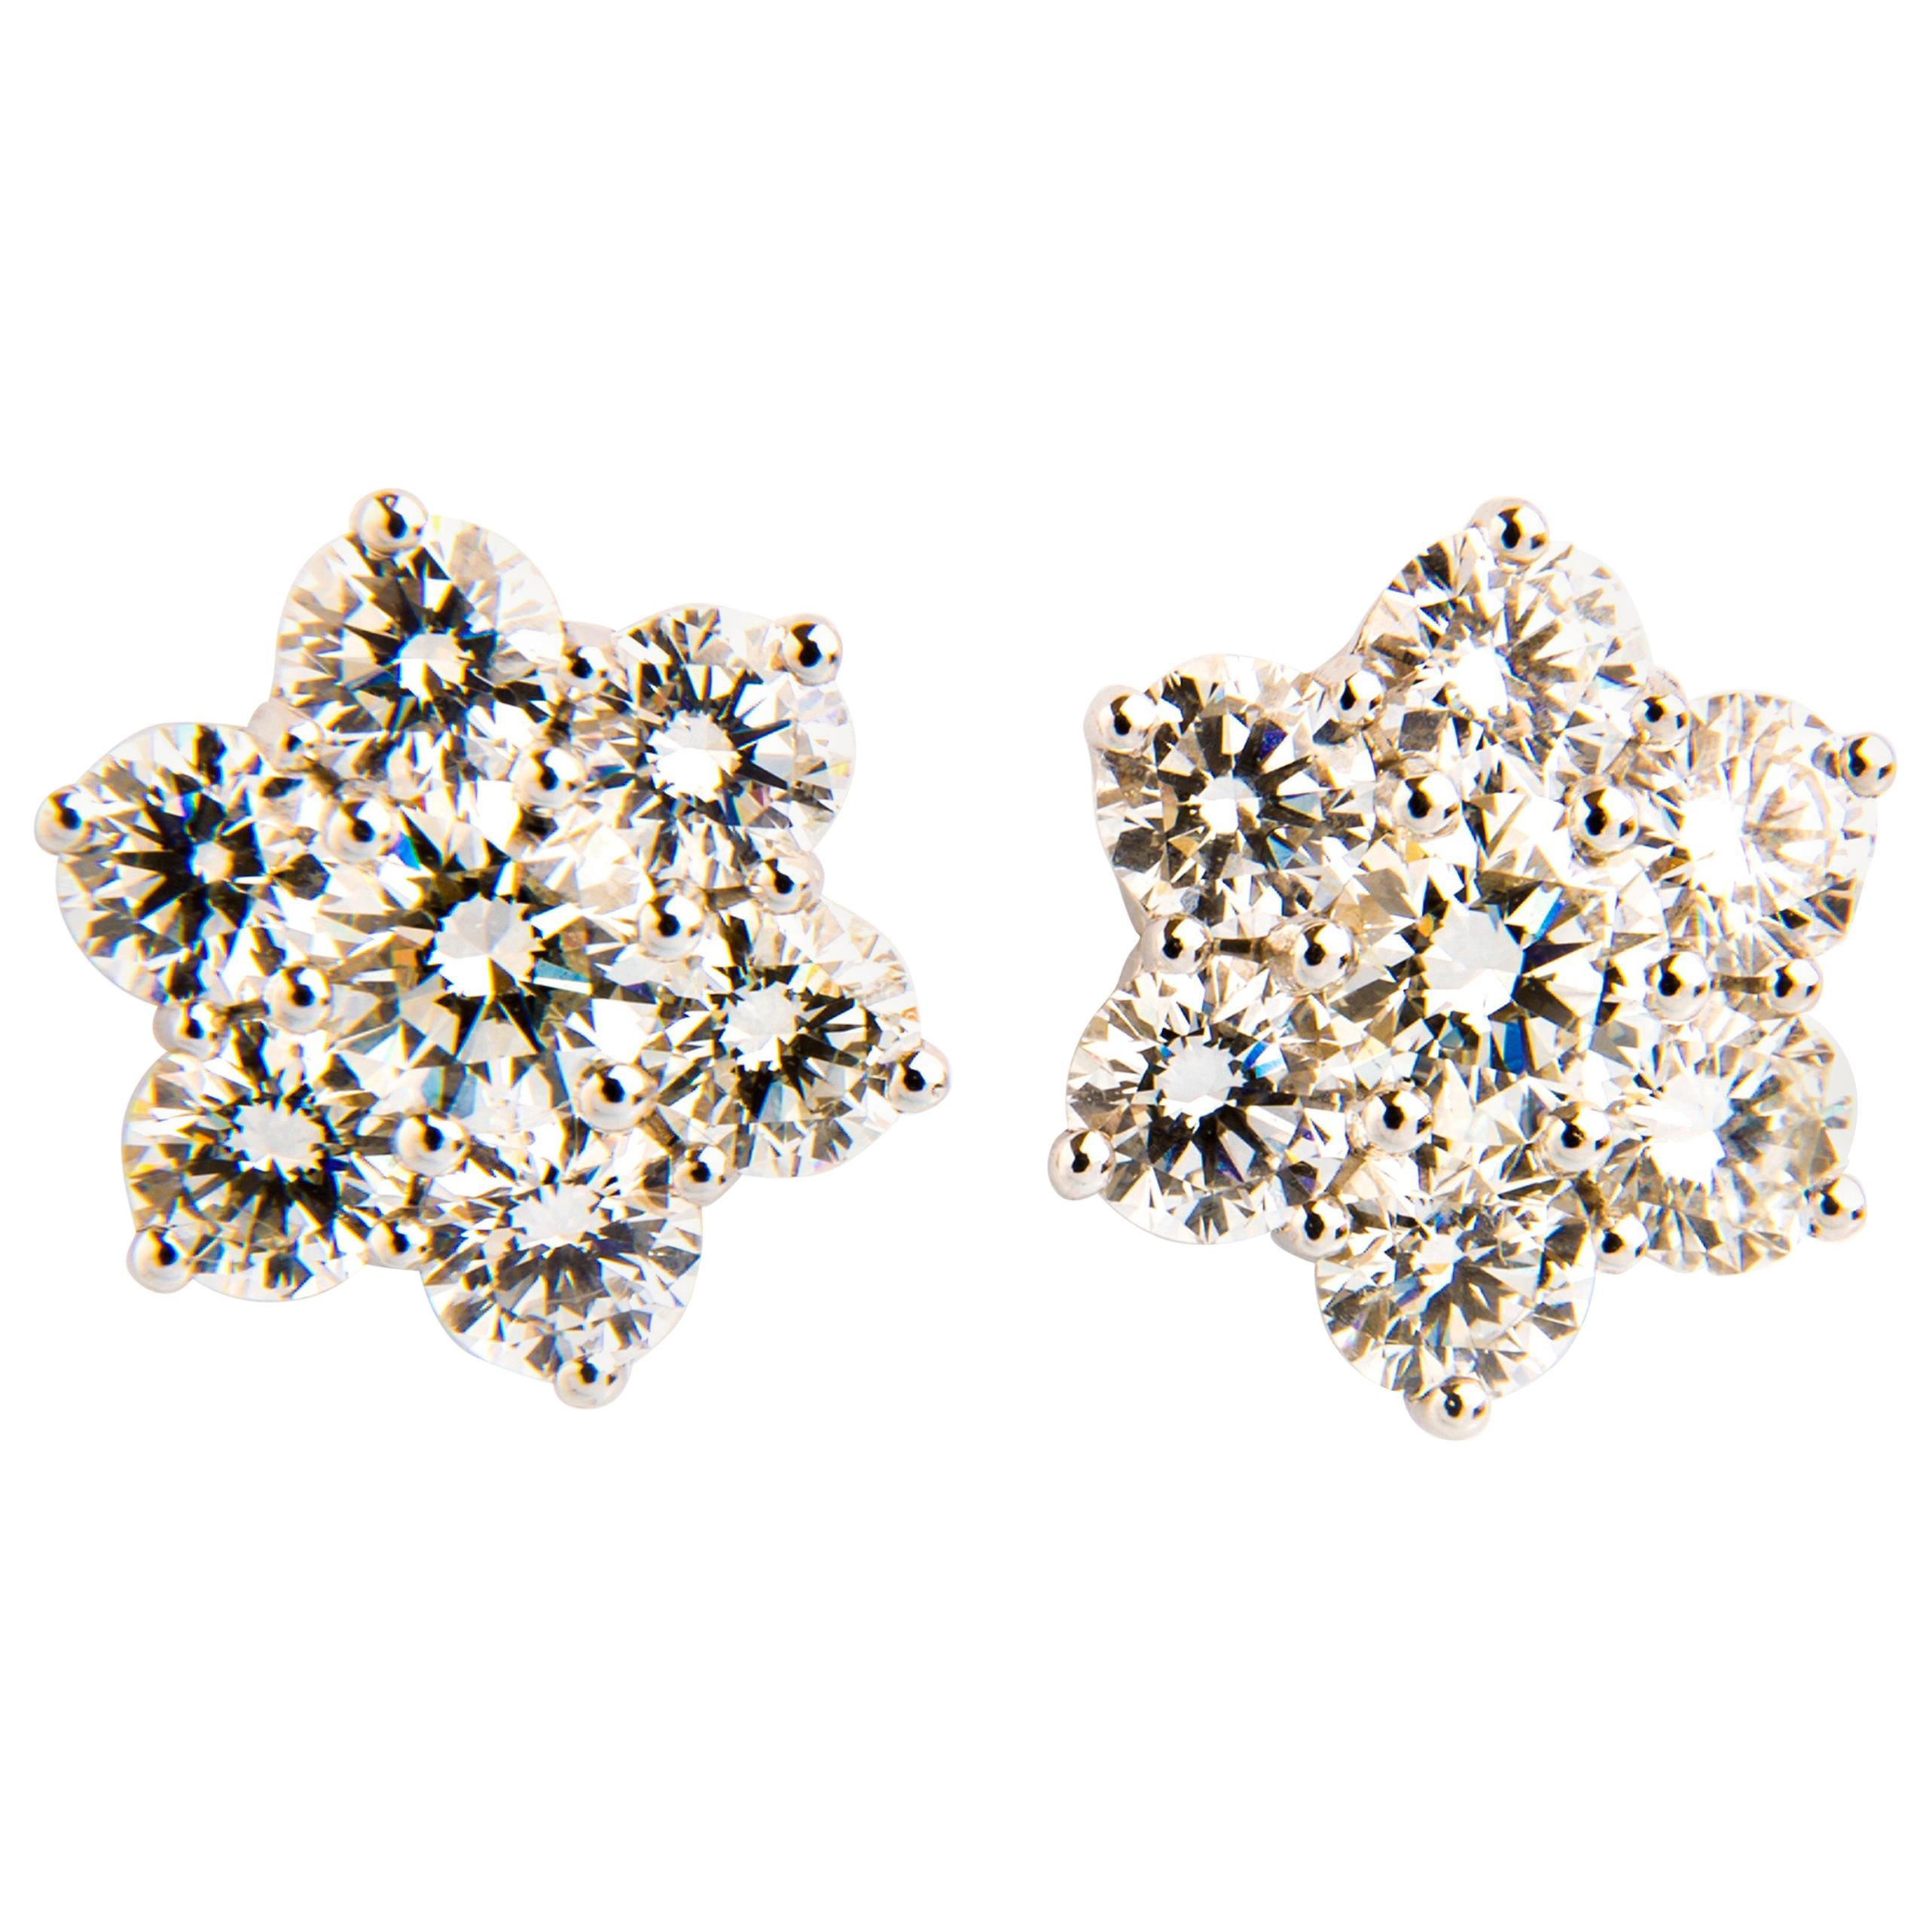 4.93 Carat Diamond Cluster Earrings Snowflake Shaped in 18 Karat White Gold For Sale